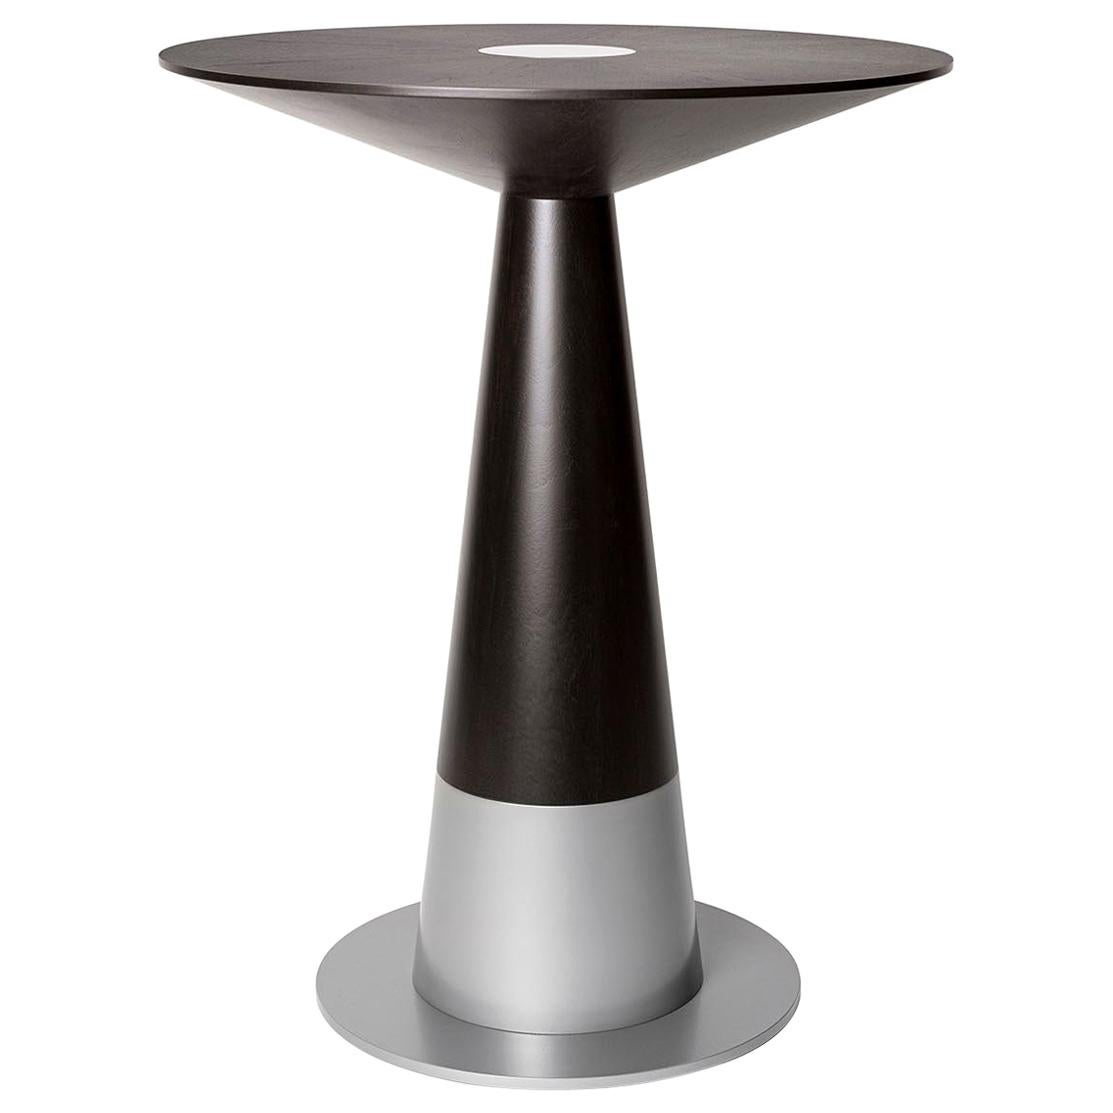 LUMA Silo Bar Pedestal Round Table with Dark Wood and Nickel Powder Coat Metal For Sale